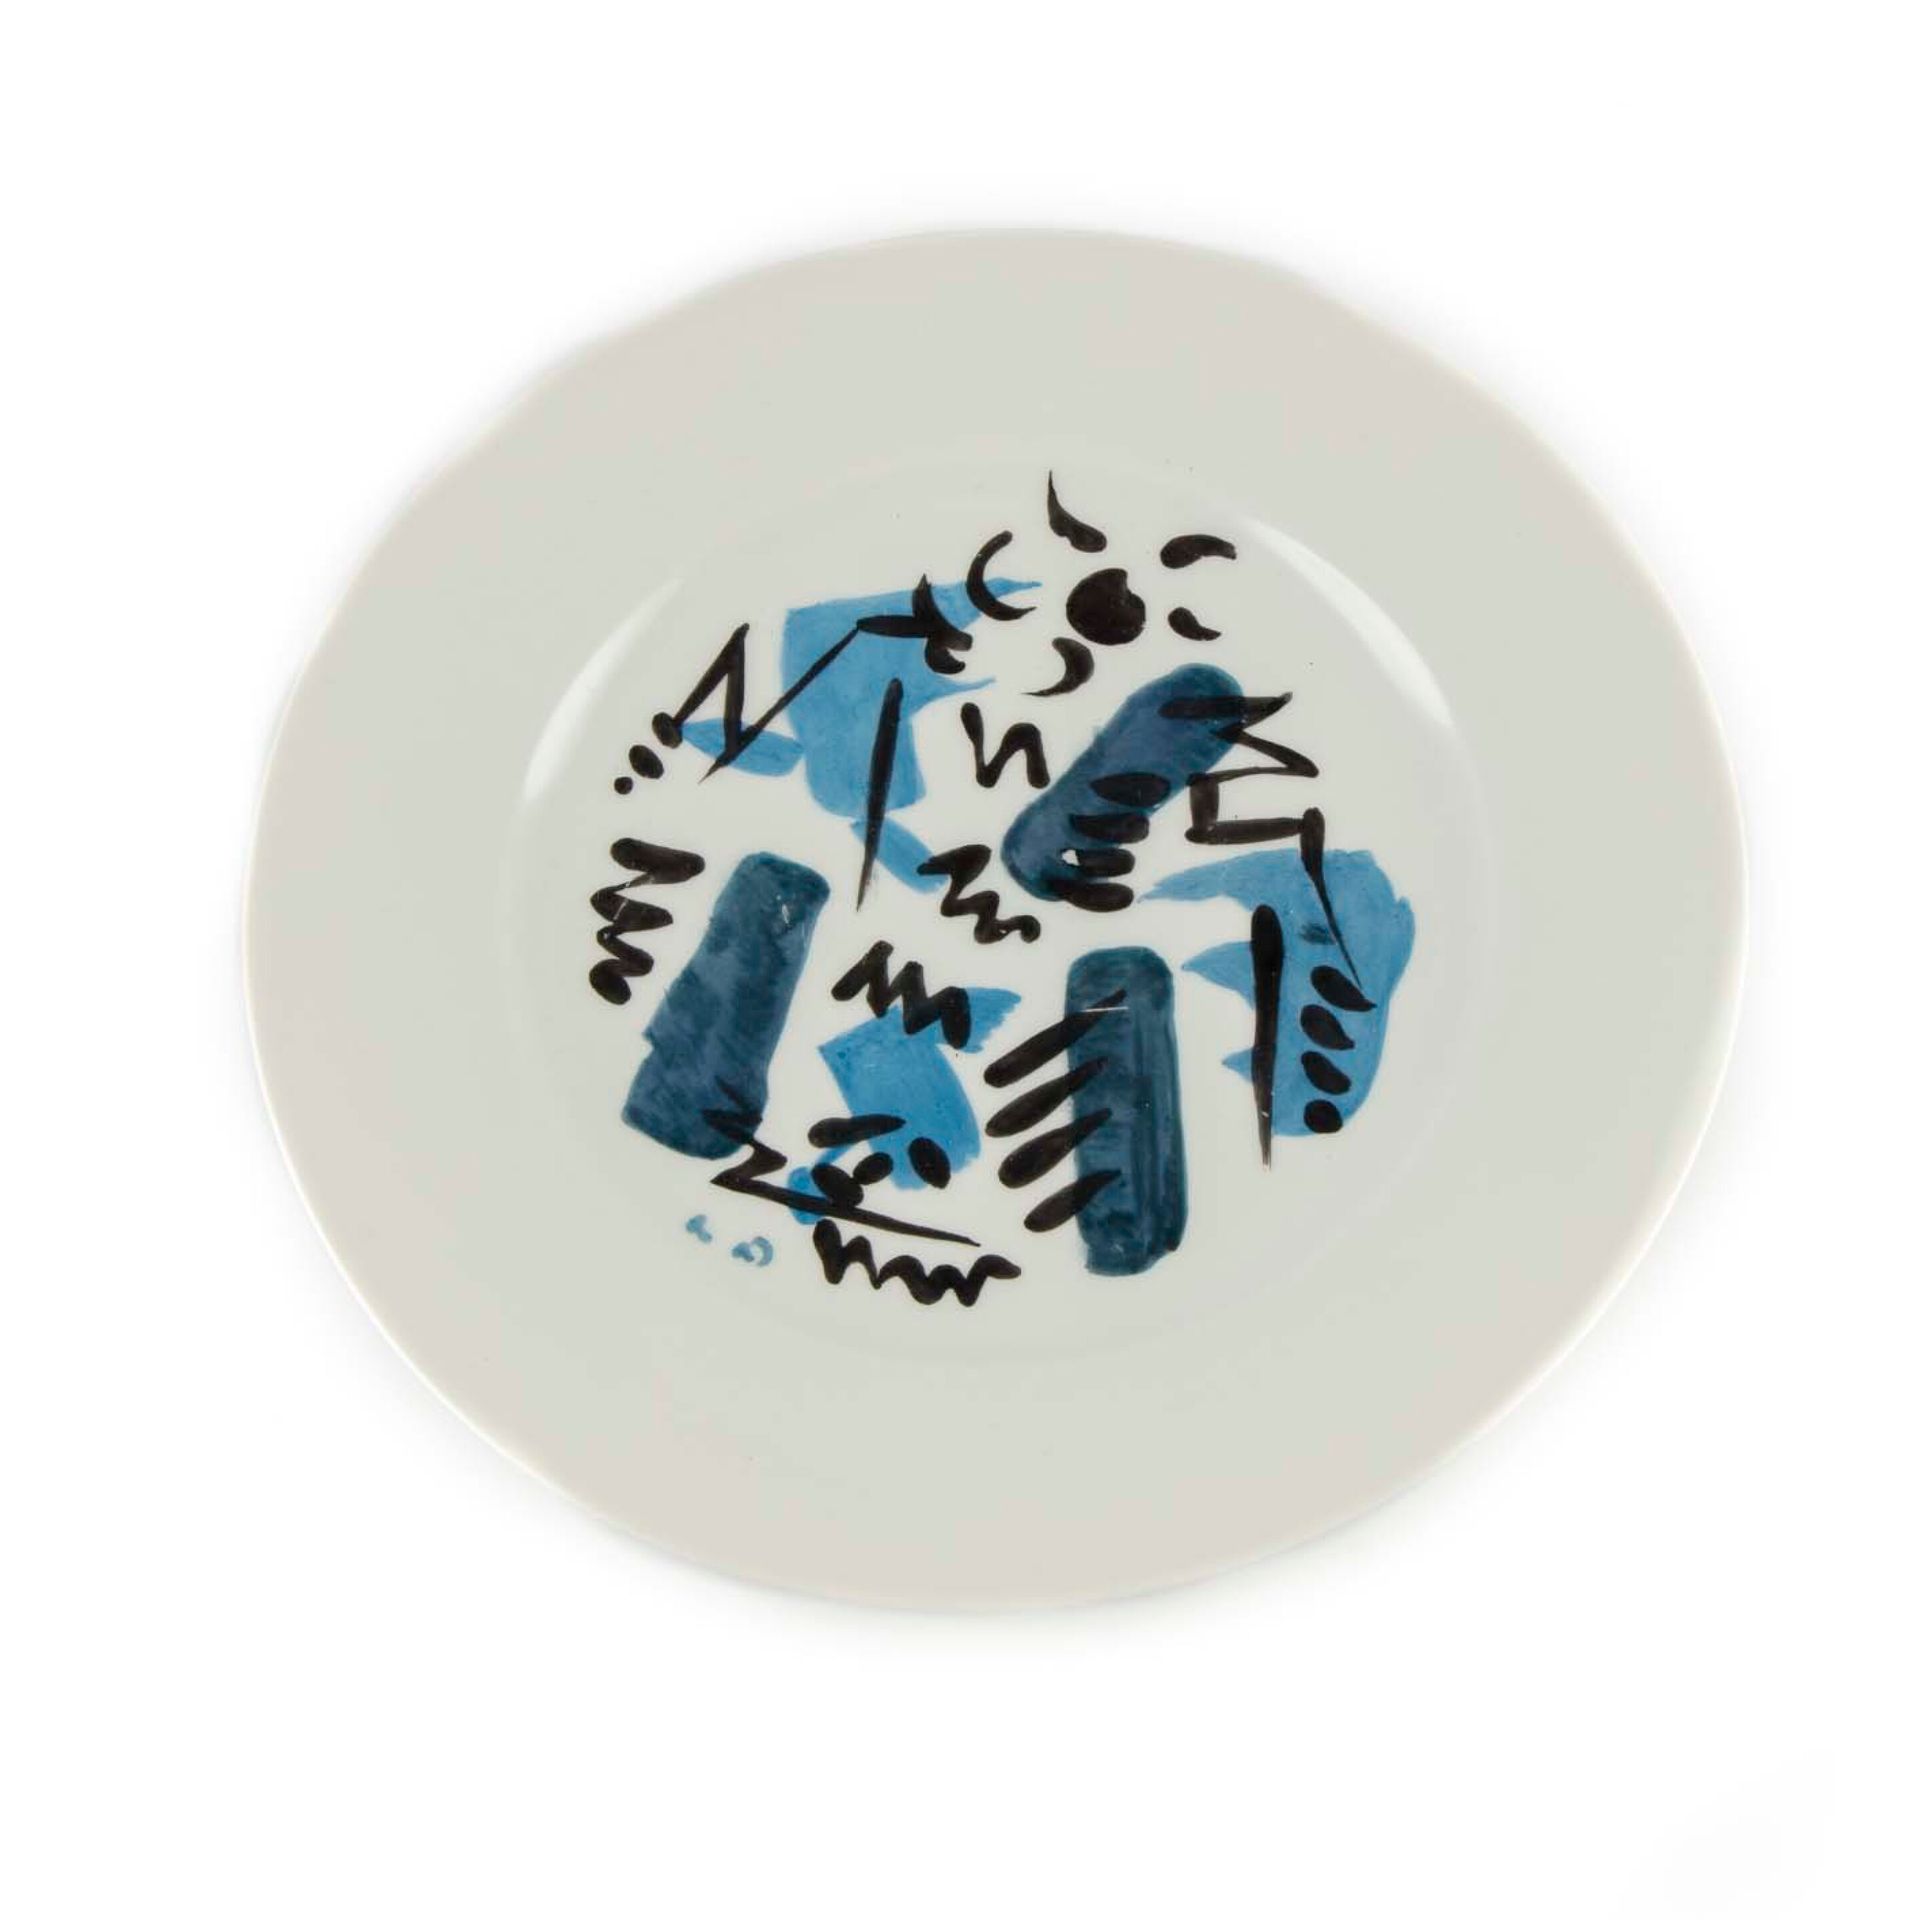 Null 安德烈-马松(1896-1987)

珐琅彩装饰的盘子

背面有签名，日期为1950年，由Christofle出版

D.25厘米